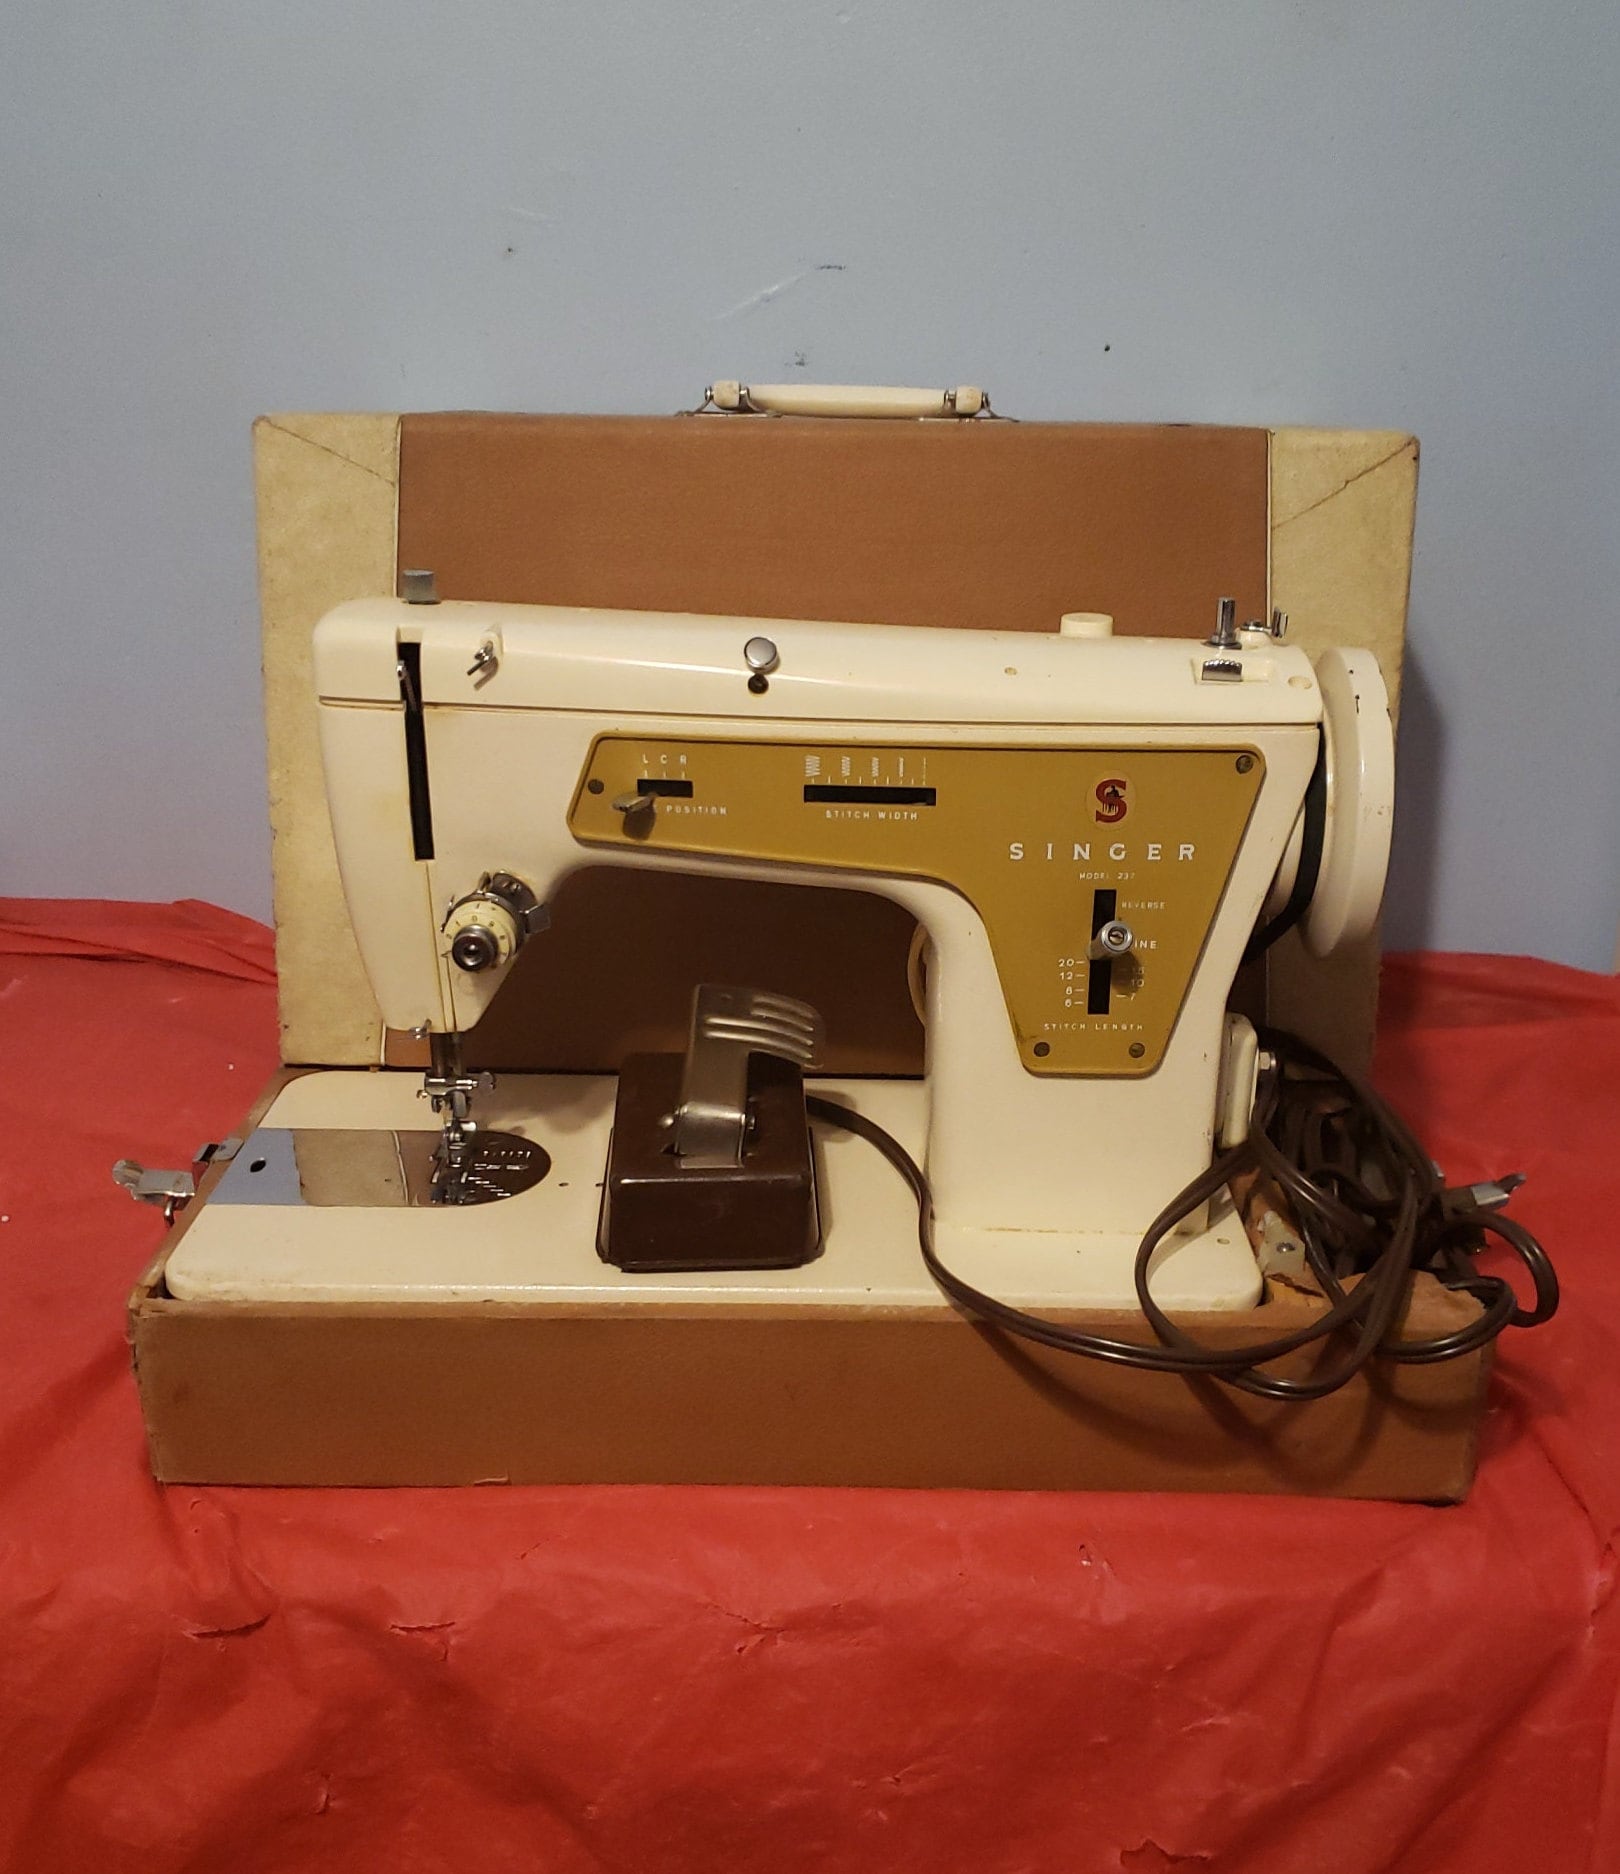 Equipment: Accessories for Singer 99K Sewing Machine; Singer; 1958; AR#1314